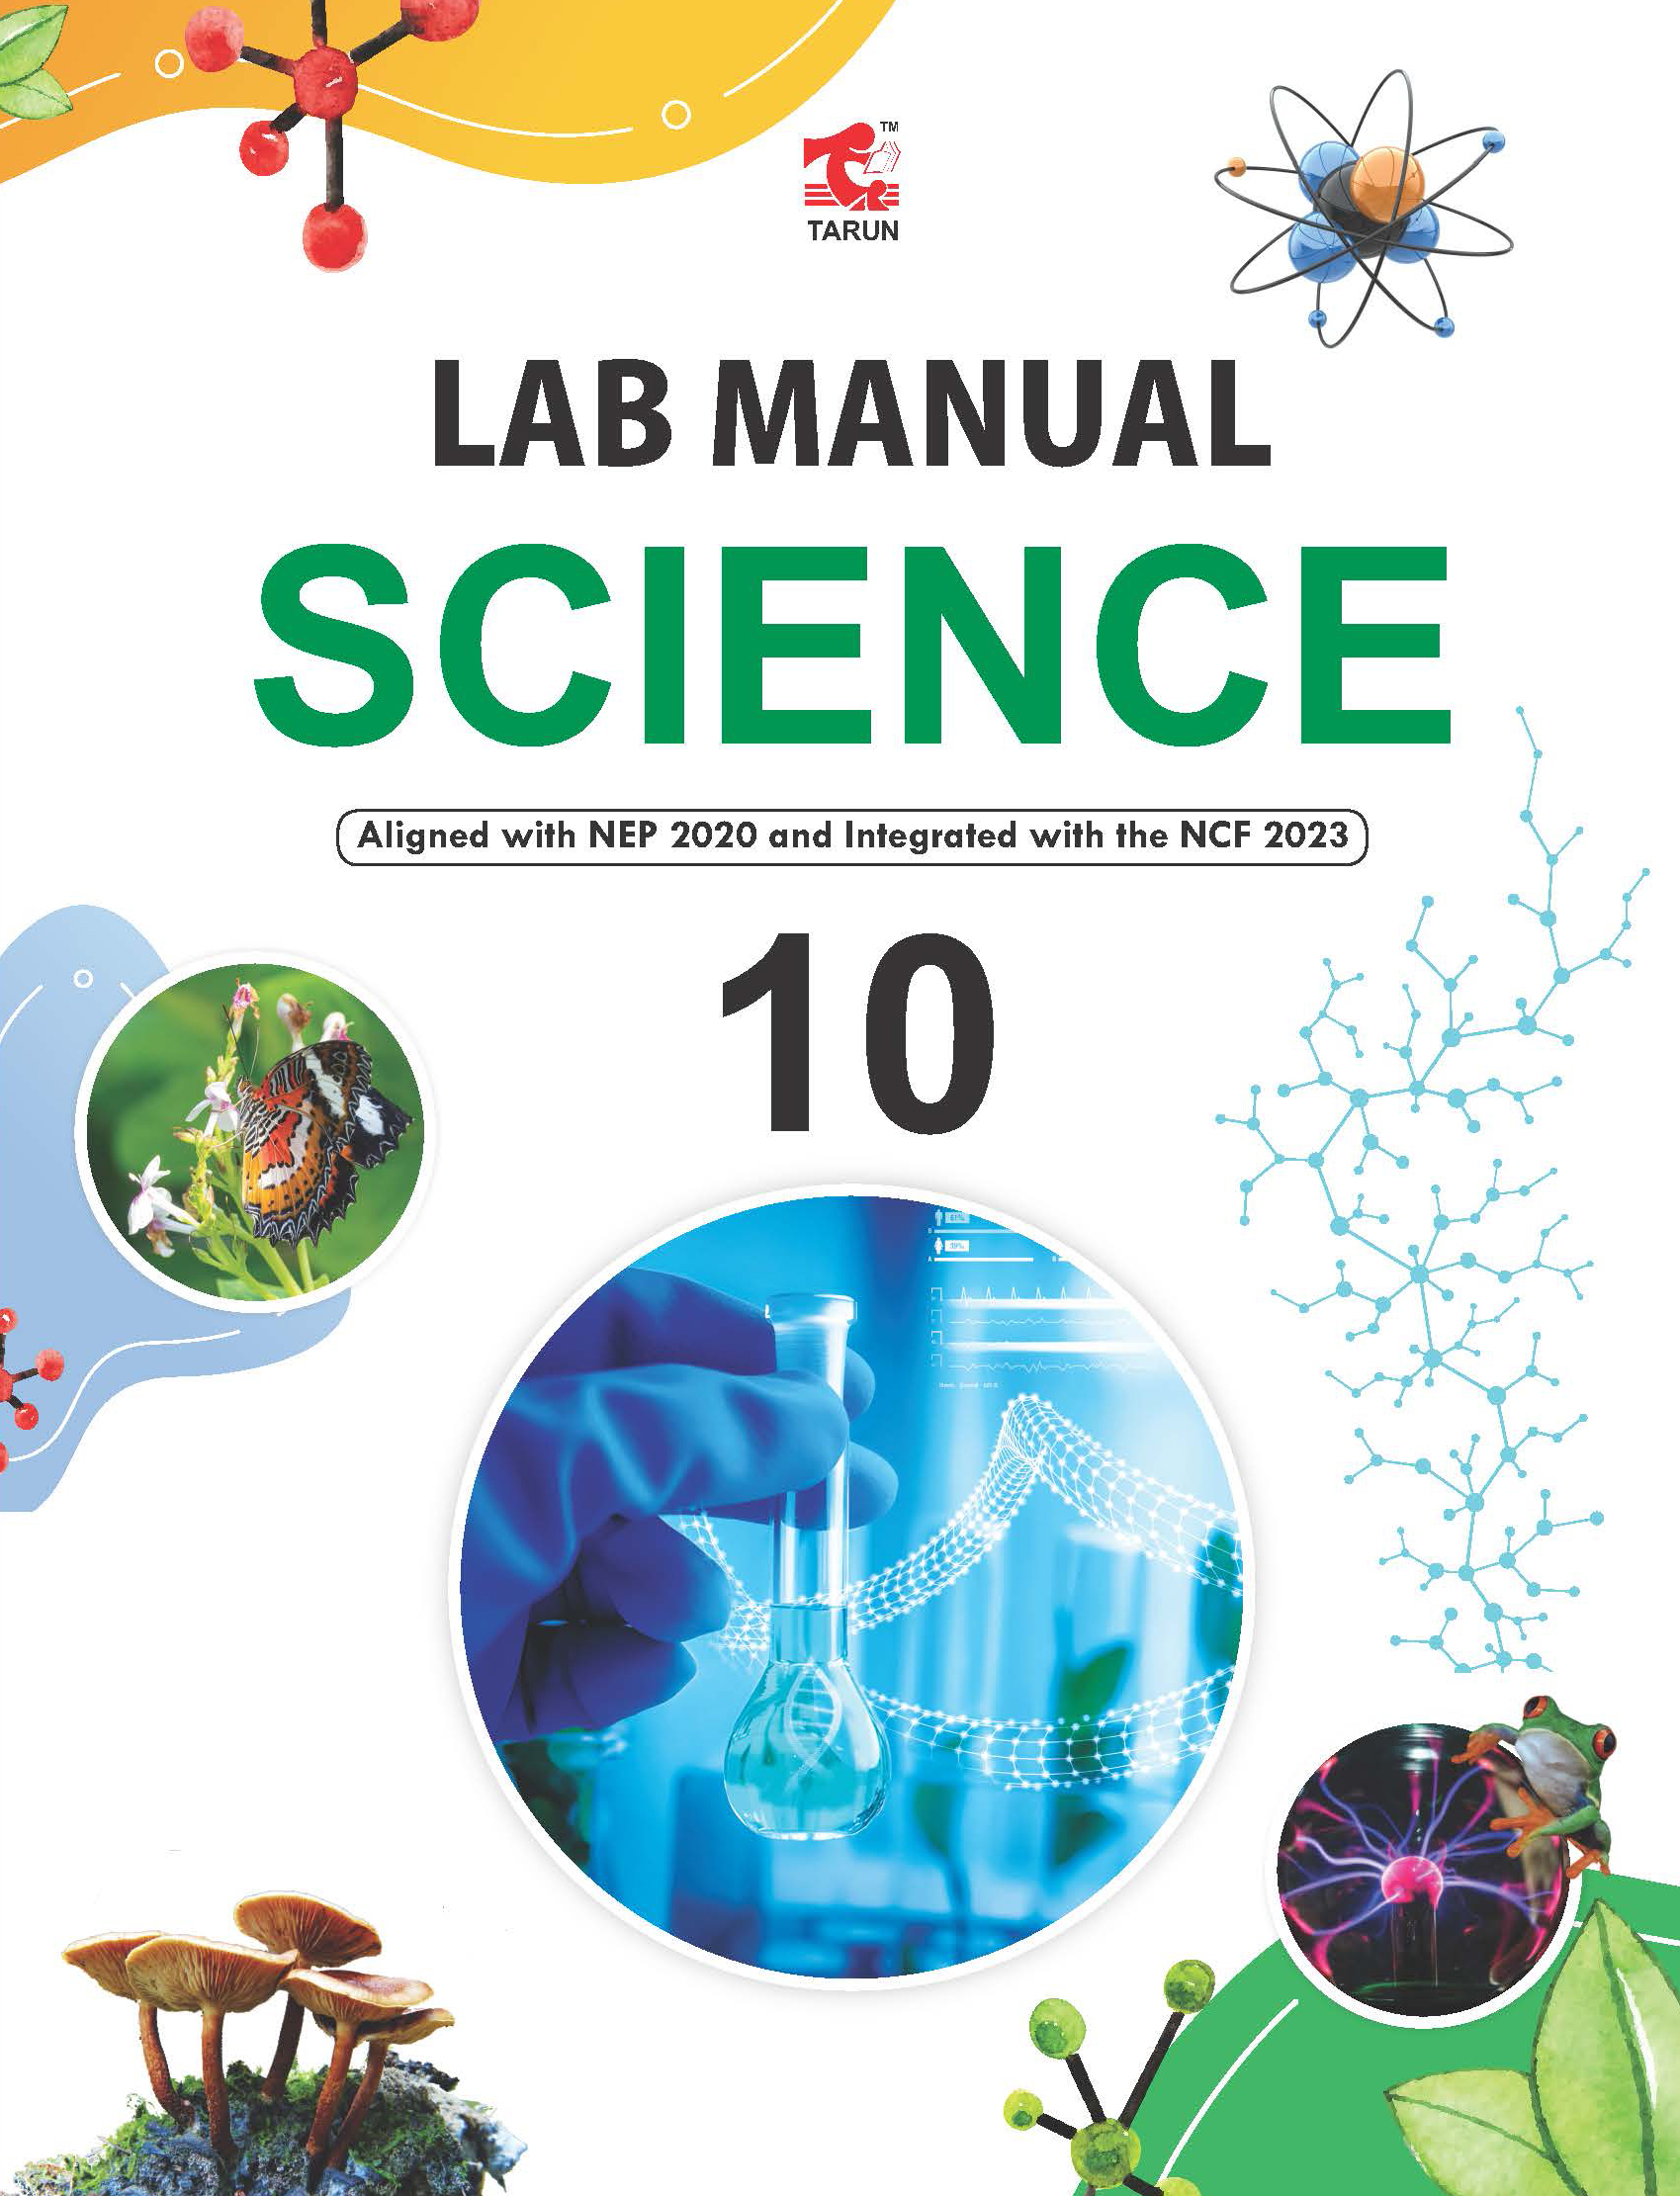 LAB MANUAL SCIENCE 10